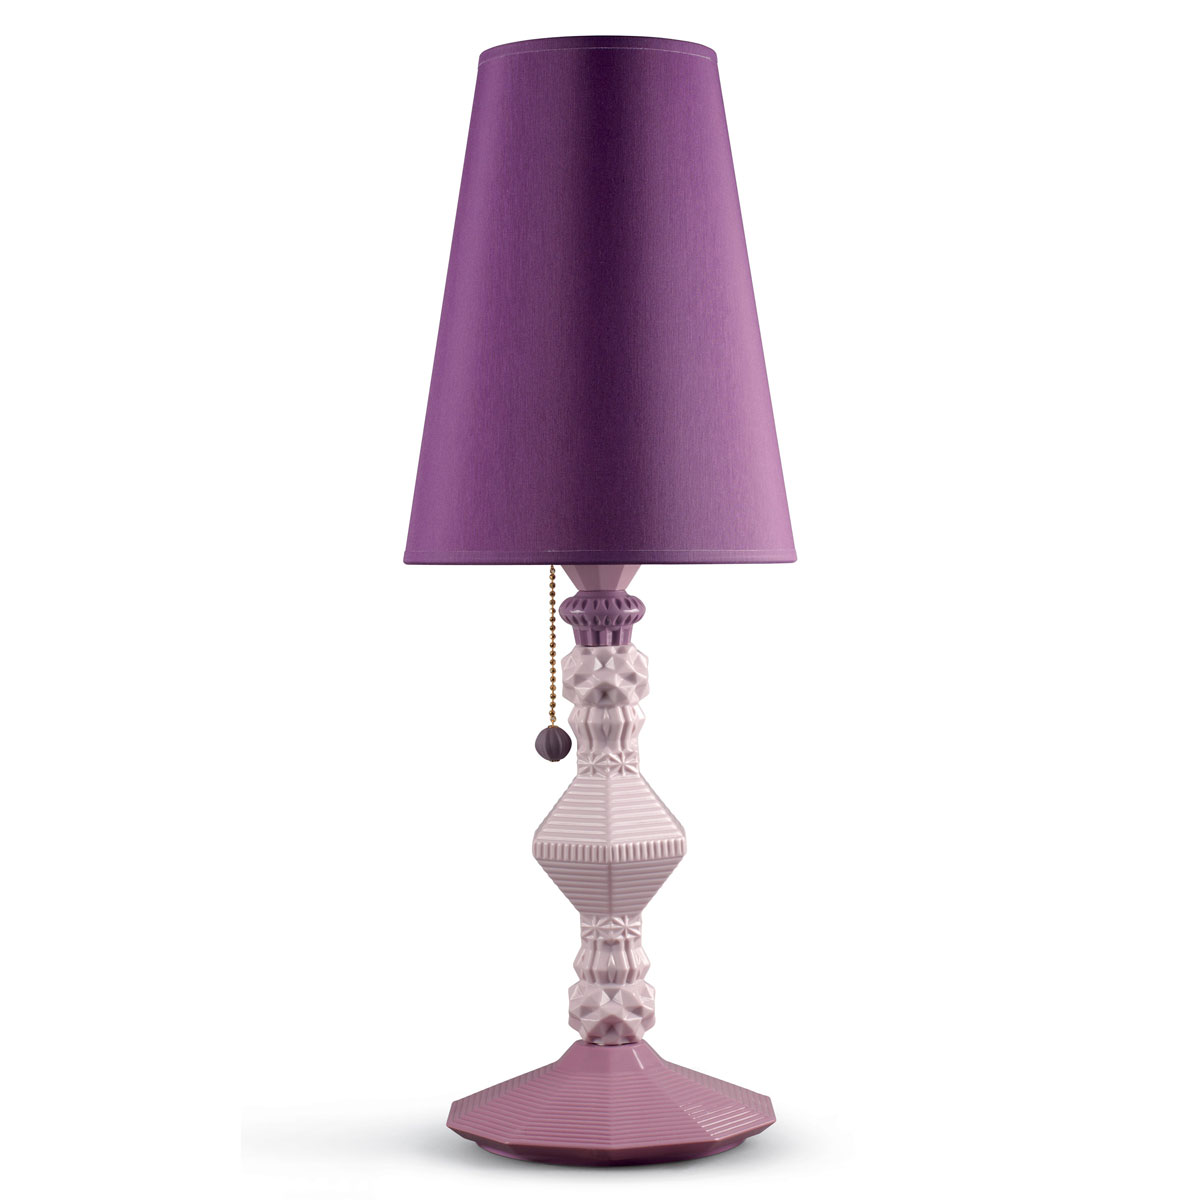 Lladro Classic Lighting, Belle De Nuit Table Lamp. Pink